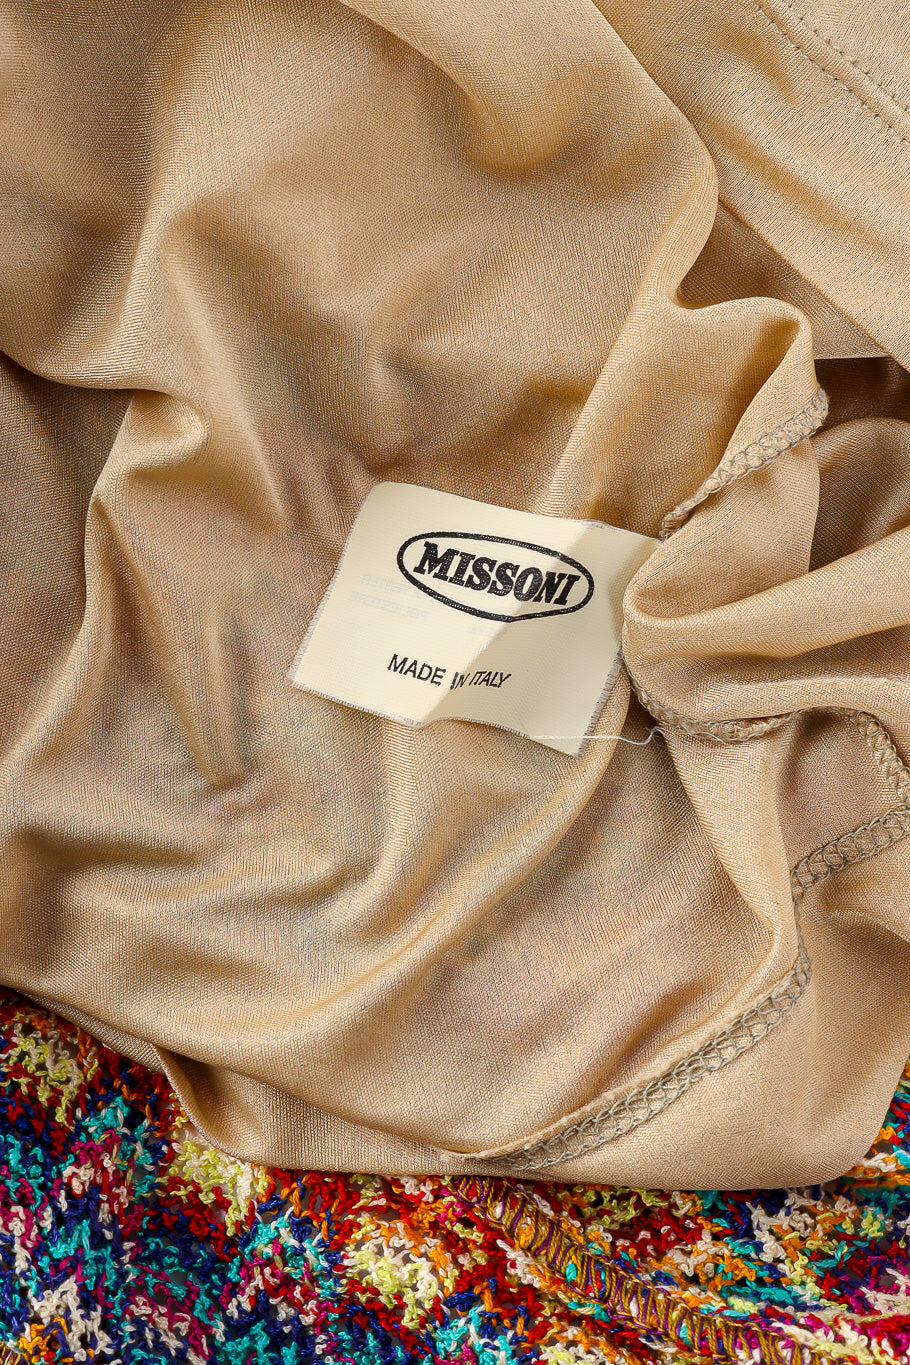 Scallop stripe classic knit 2 piece set by Missoni tag inside skirt lining @recessla